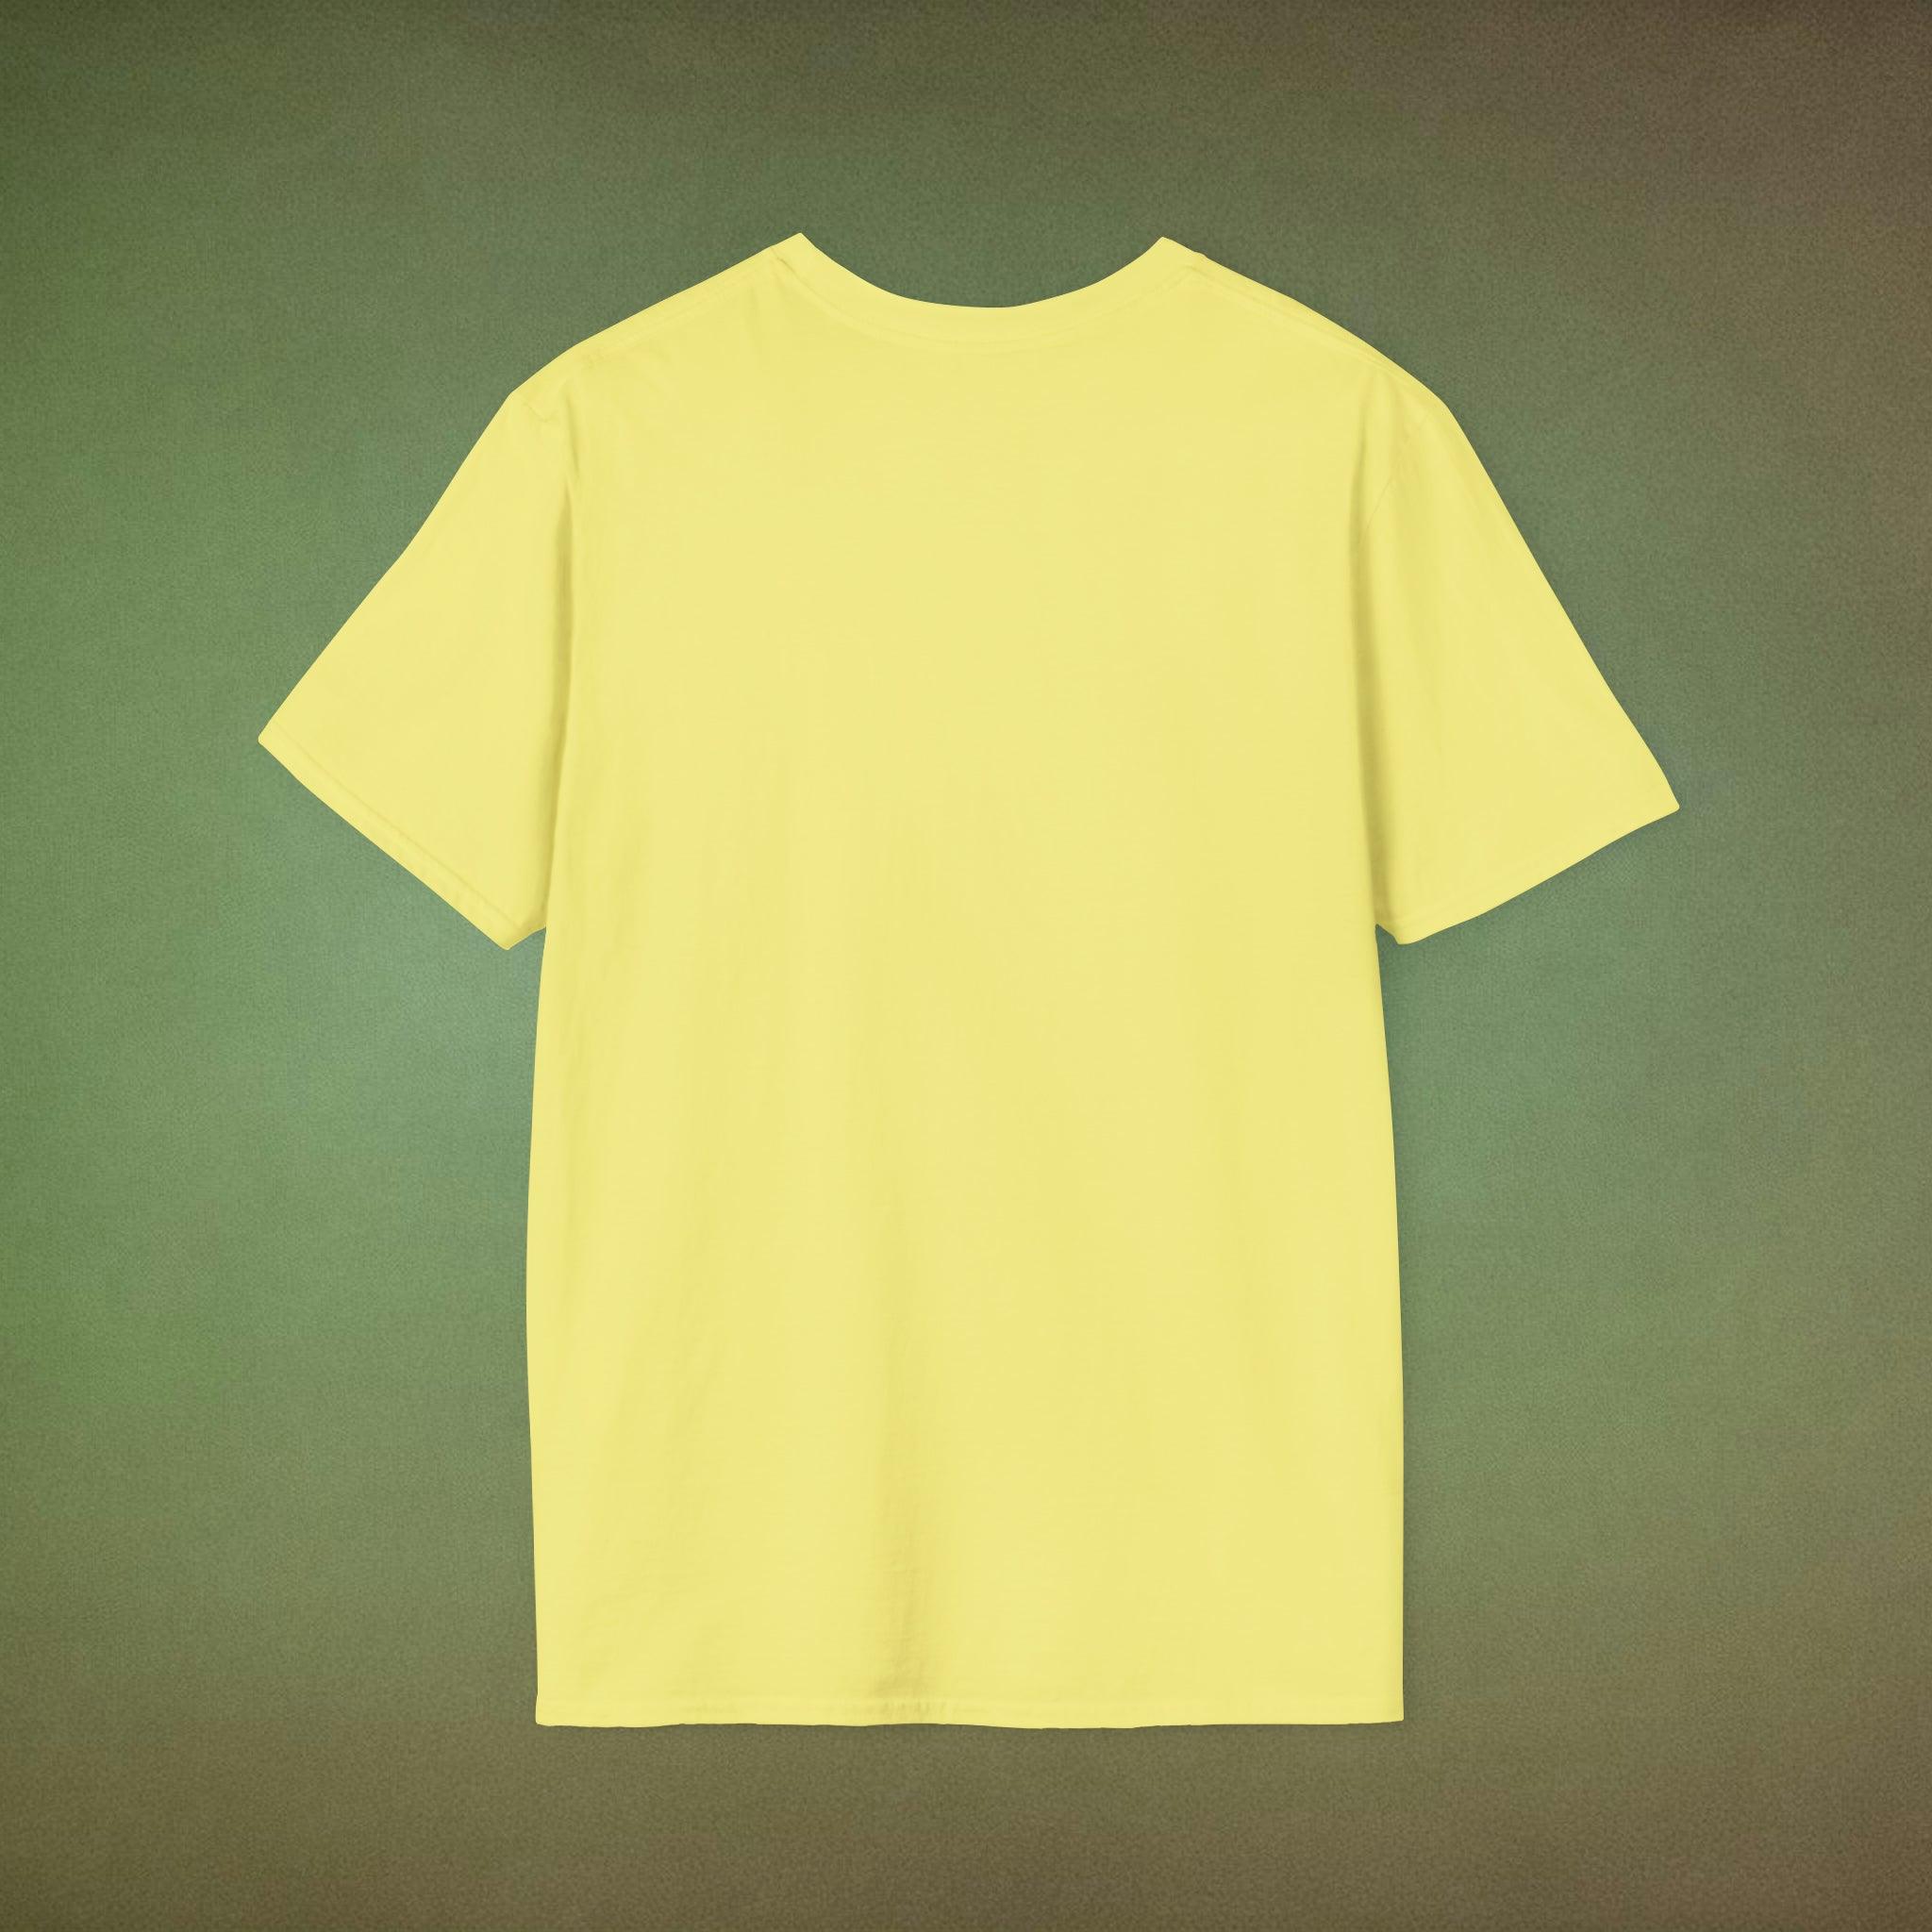 Shine Like The Sun T-Shirt - Classic Variable